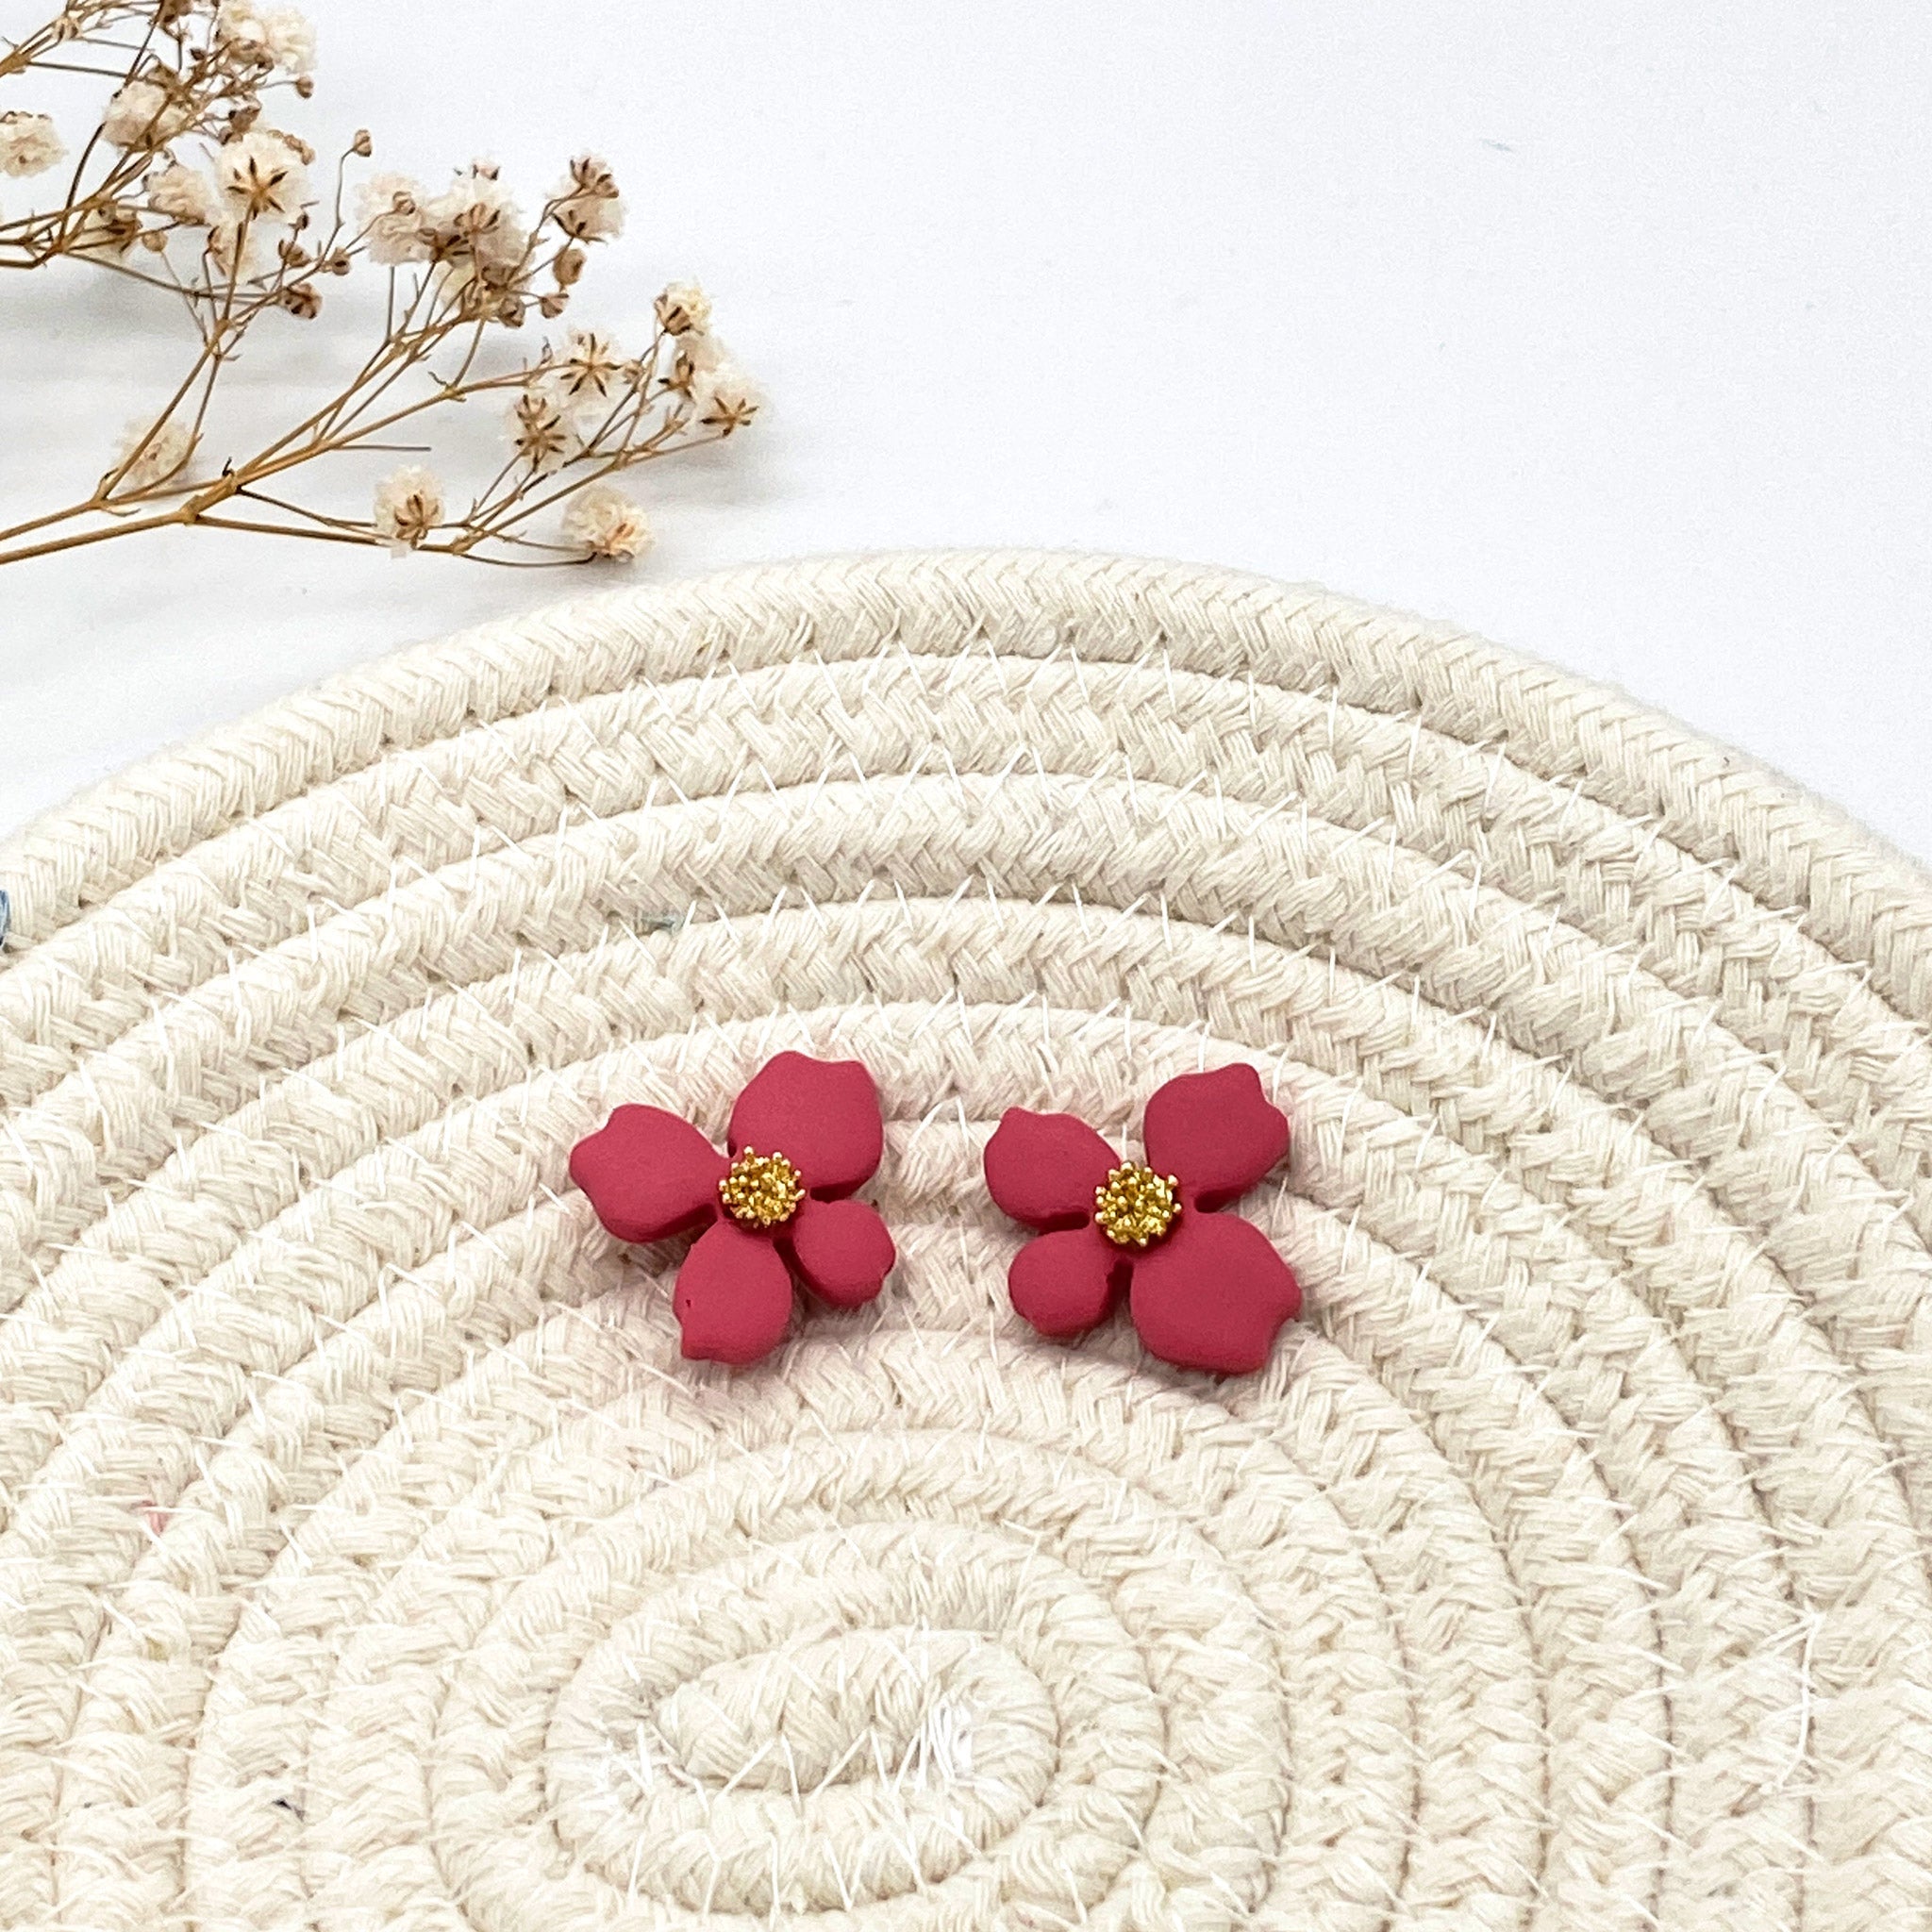 Deep Pink Flower Shaped Stud Earrings - The Suffolk Crafter